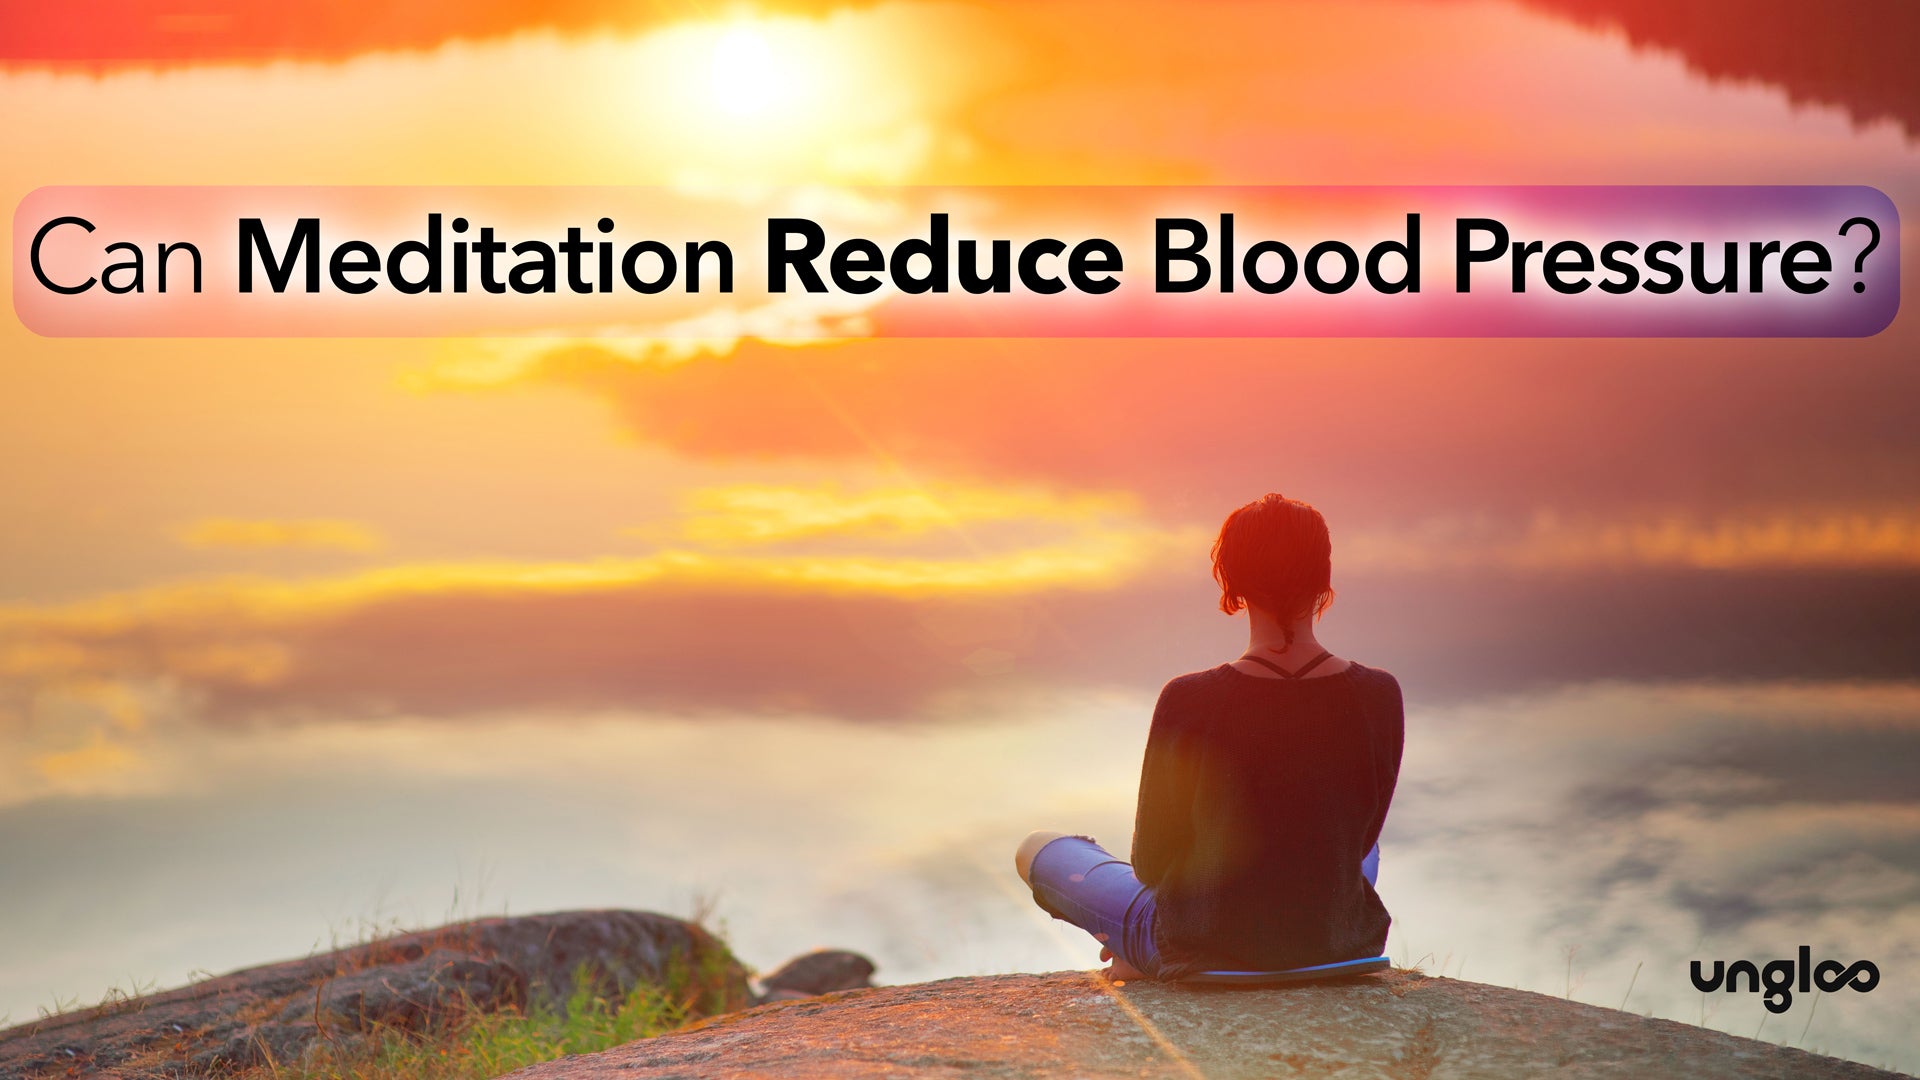 Can meditation reduce blood pressure?